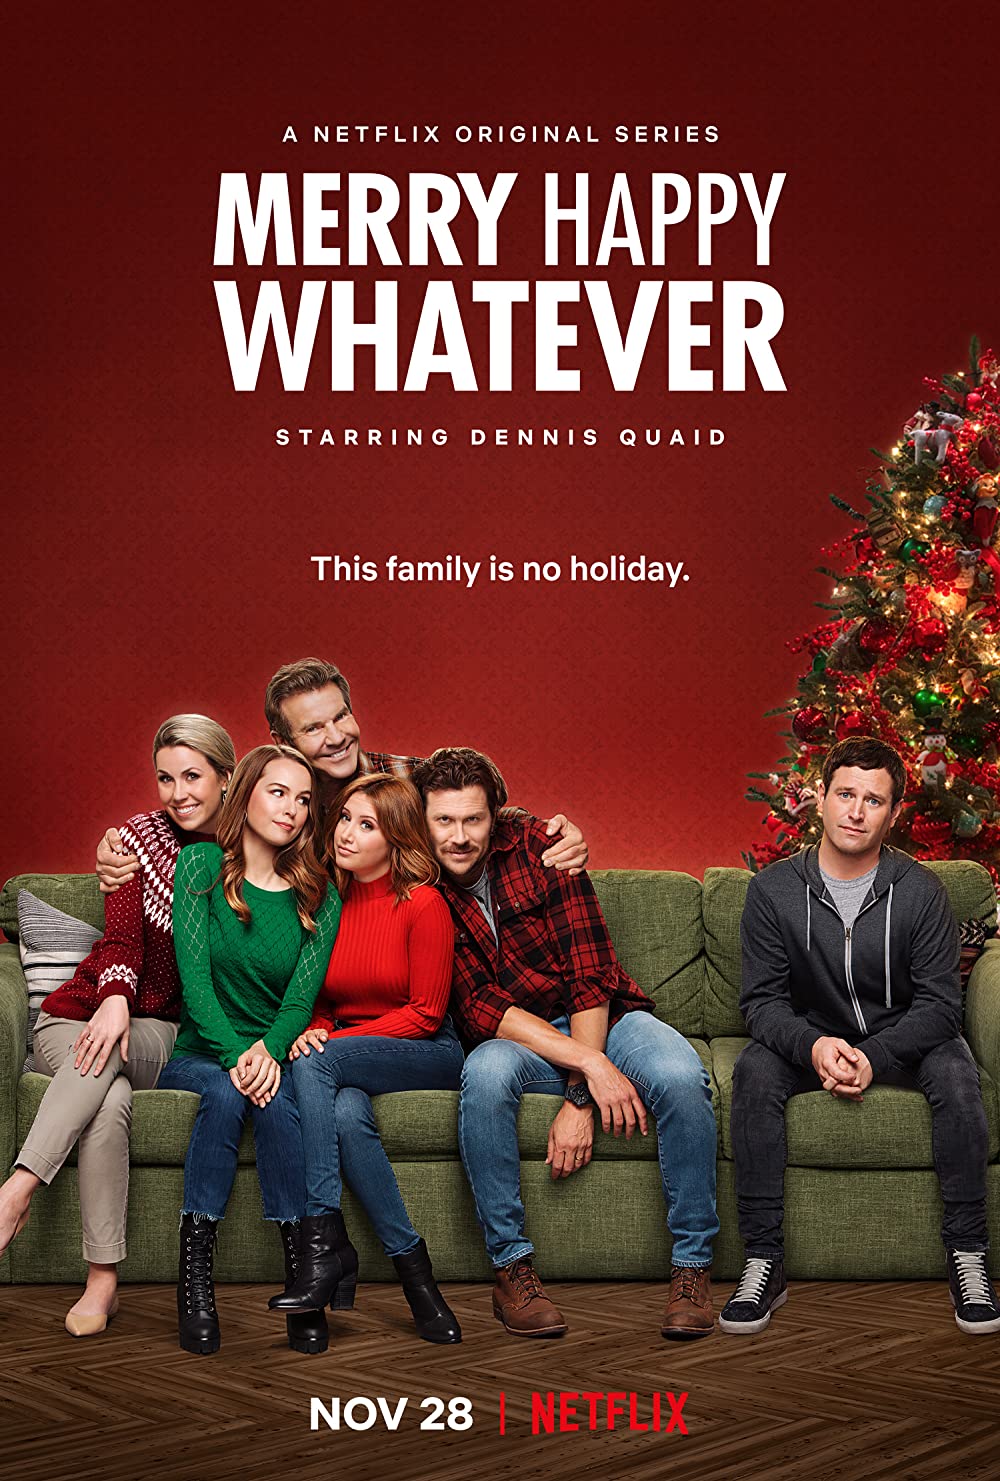 Merry Happy Whatever on Netflix (Pic credit: IMDb)